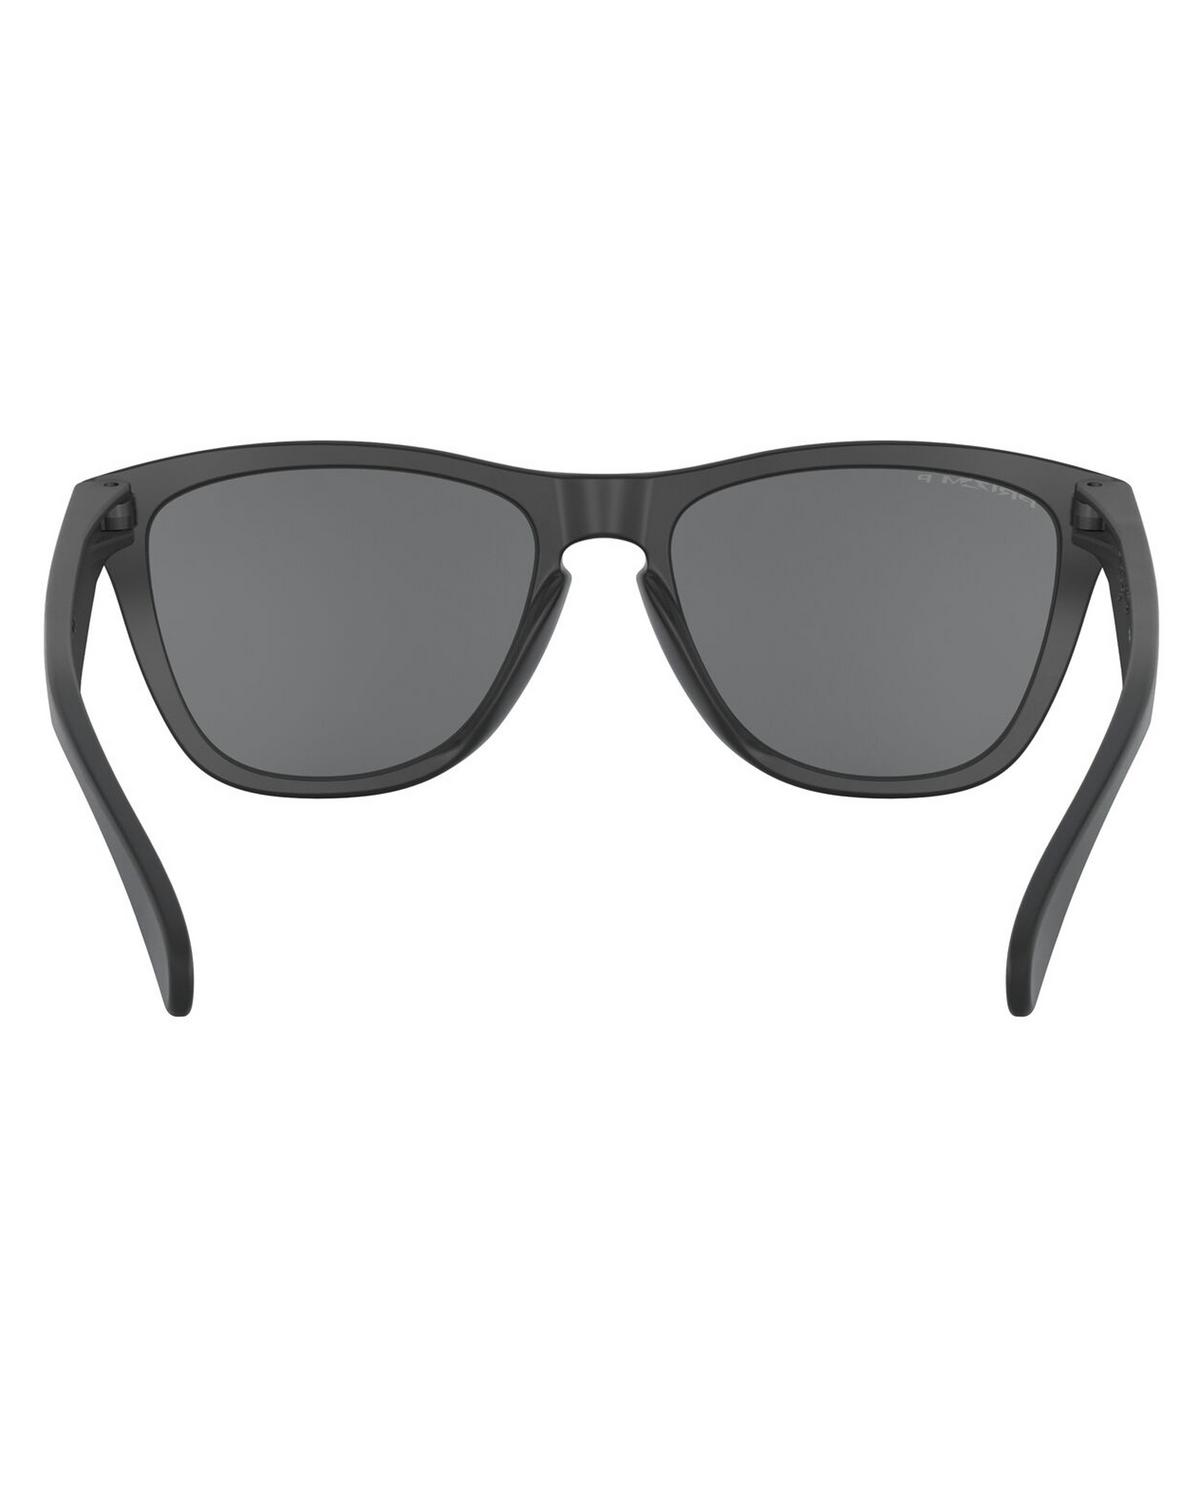 Oakley Frogskins Sunglasses -  Black